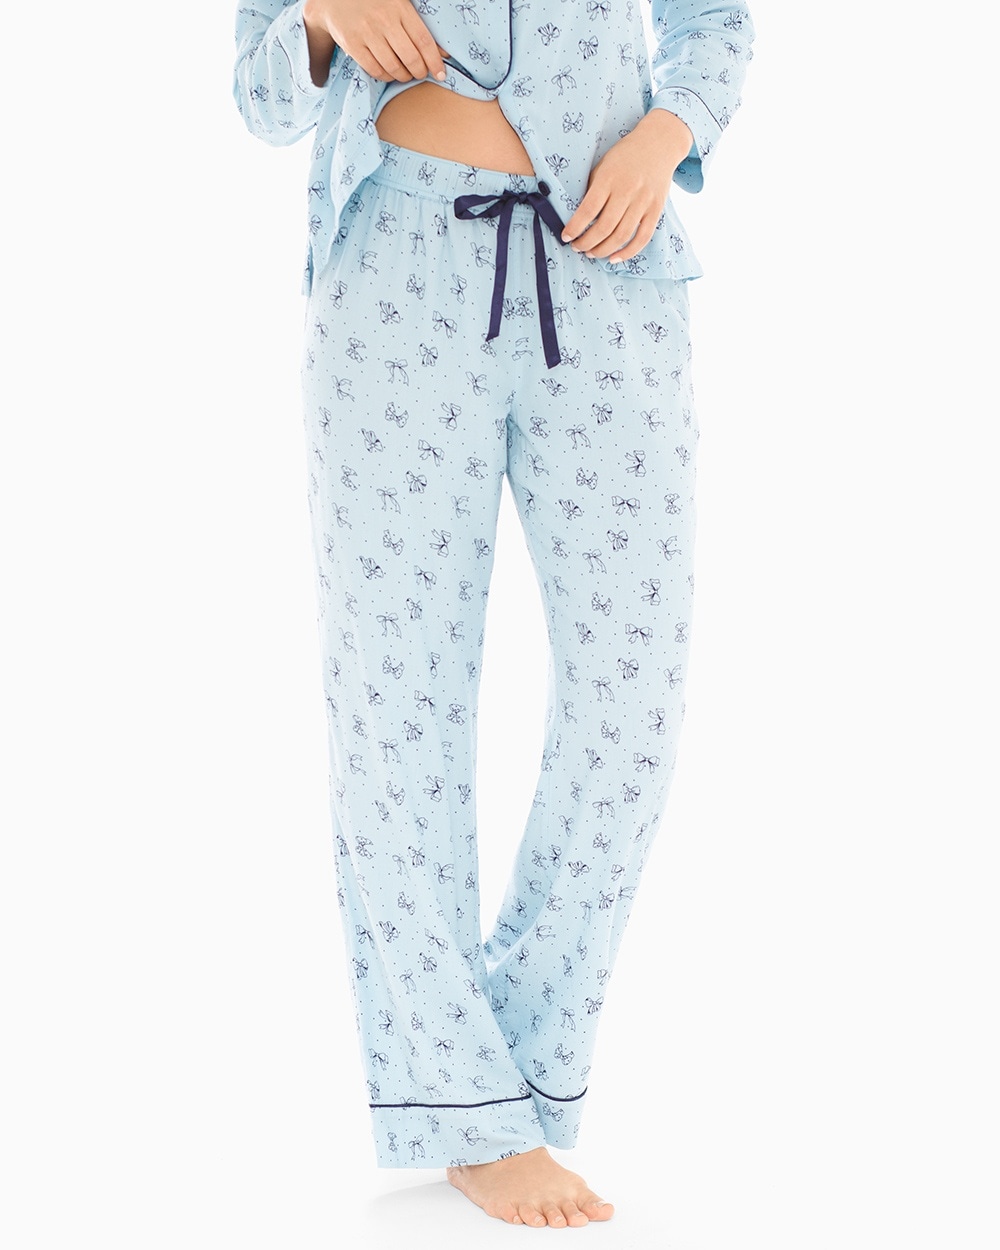 Cozy Woven Cotton Blend Pajama Pants Pretty Bows Blue Crystal